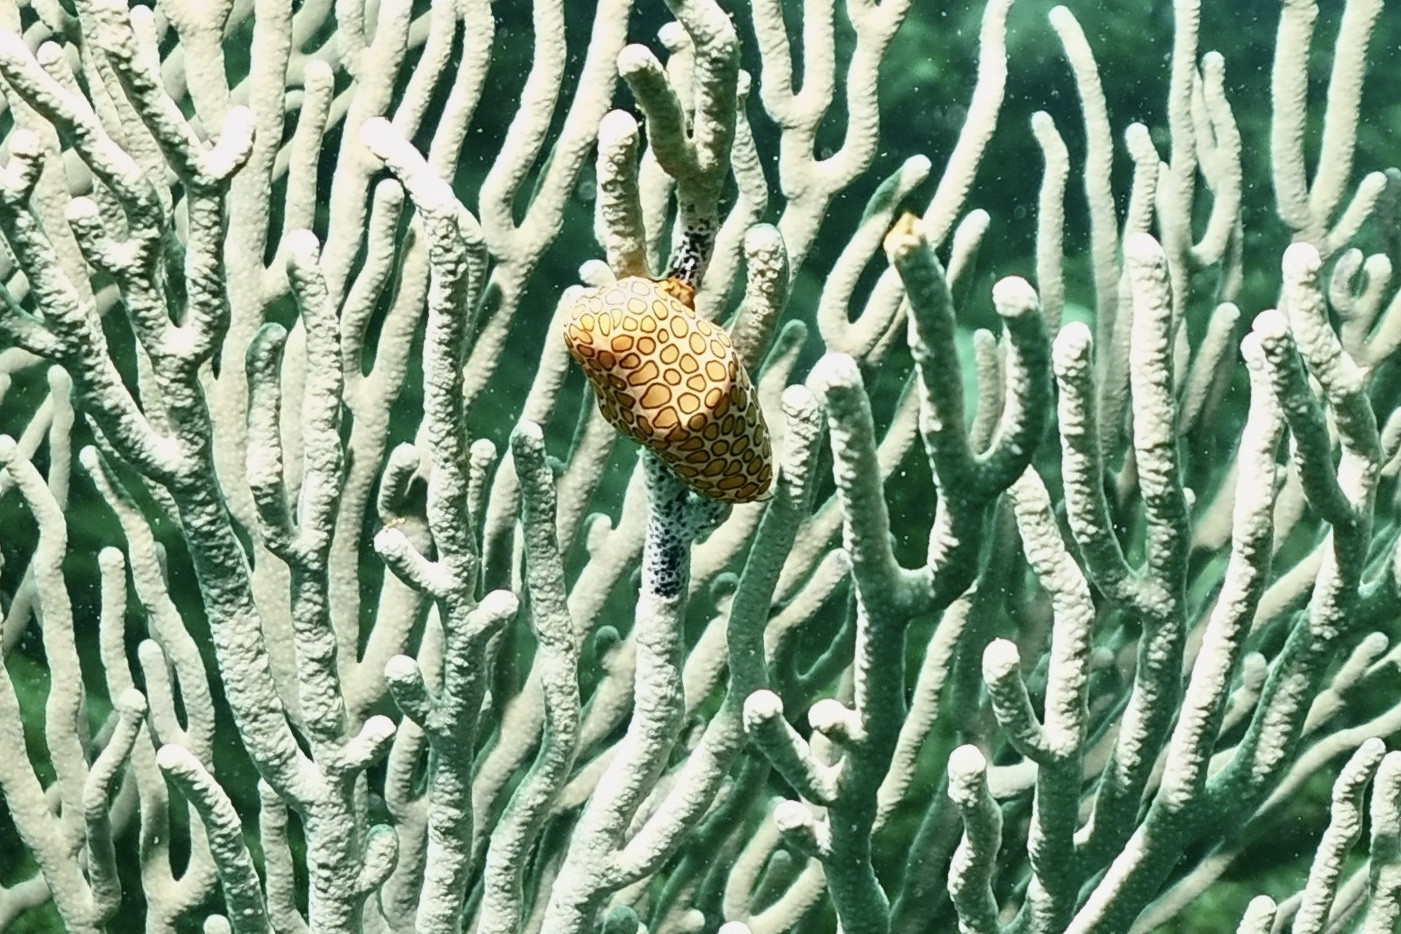 Sea life found while scuba diving.